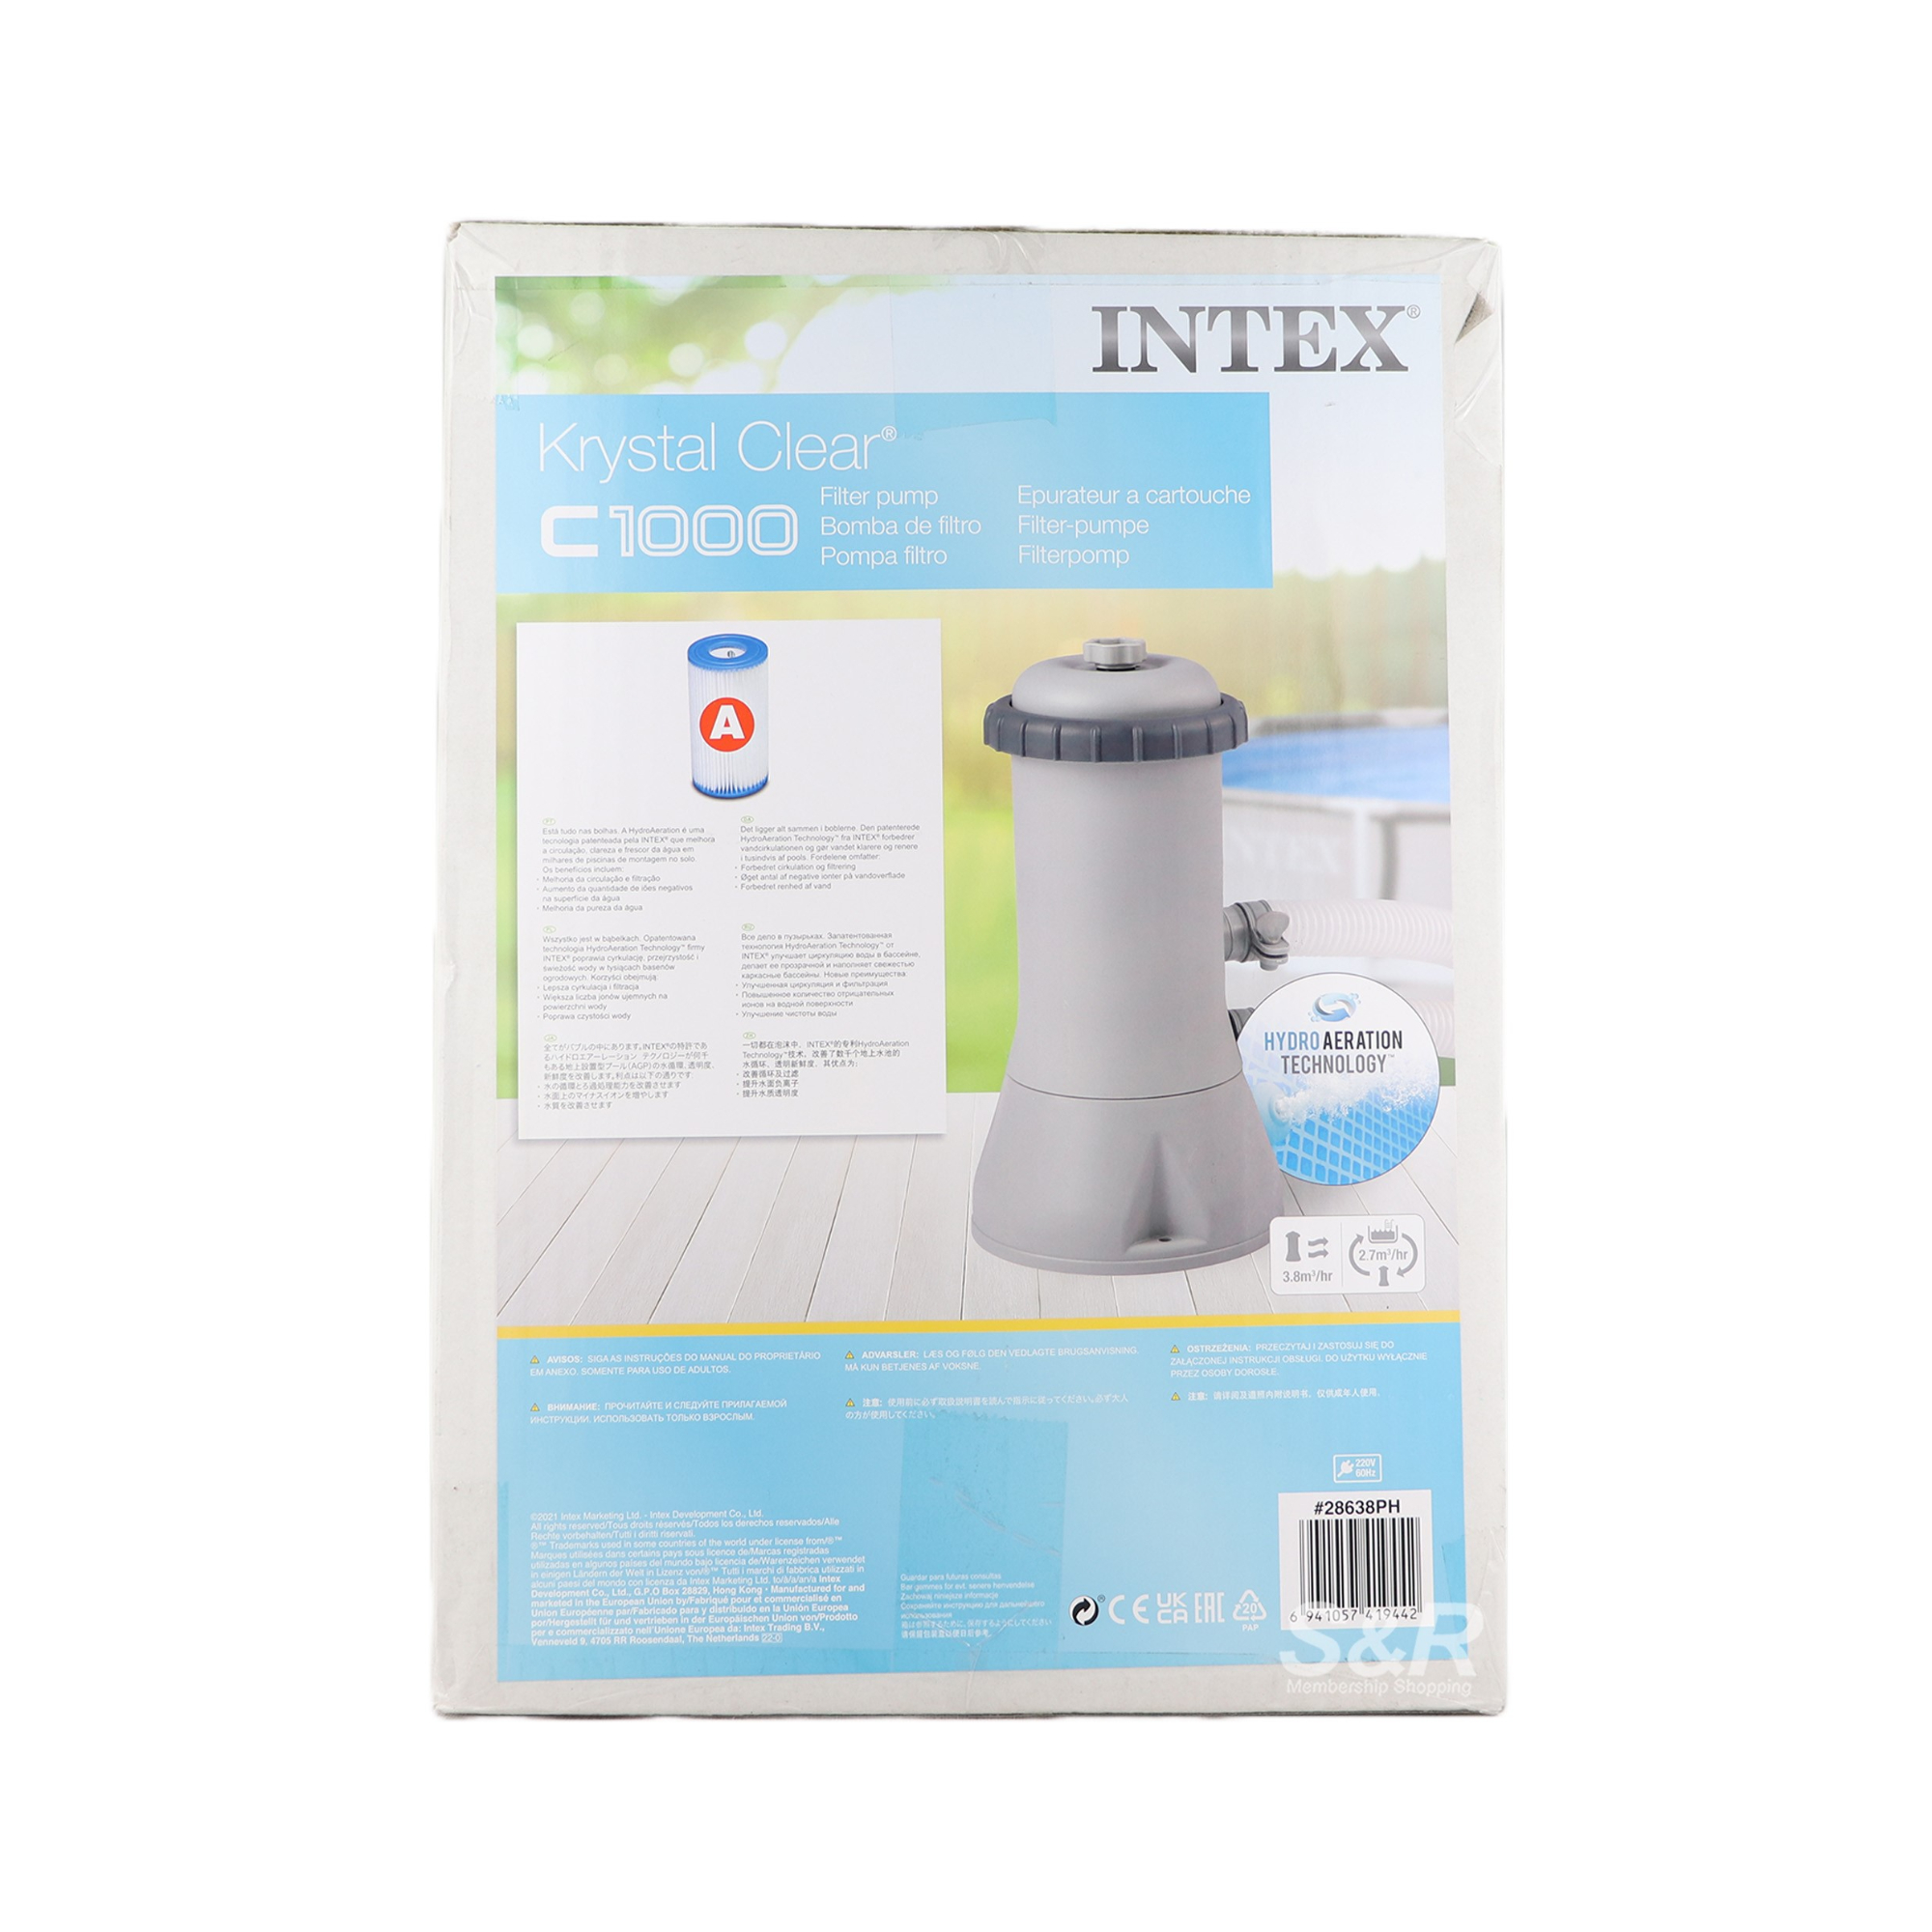 Intex Krystal Clear C1000 Cartridge Filter Pump 1pc